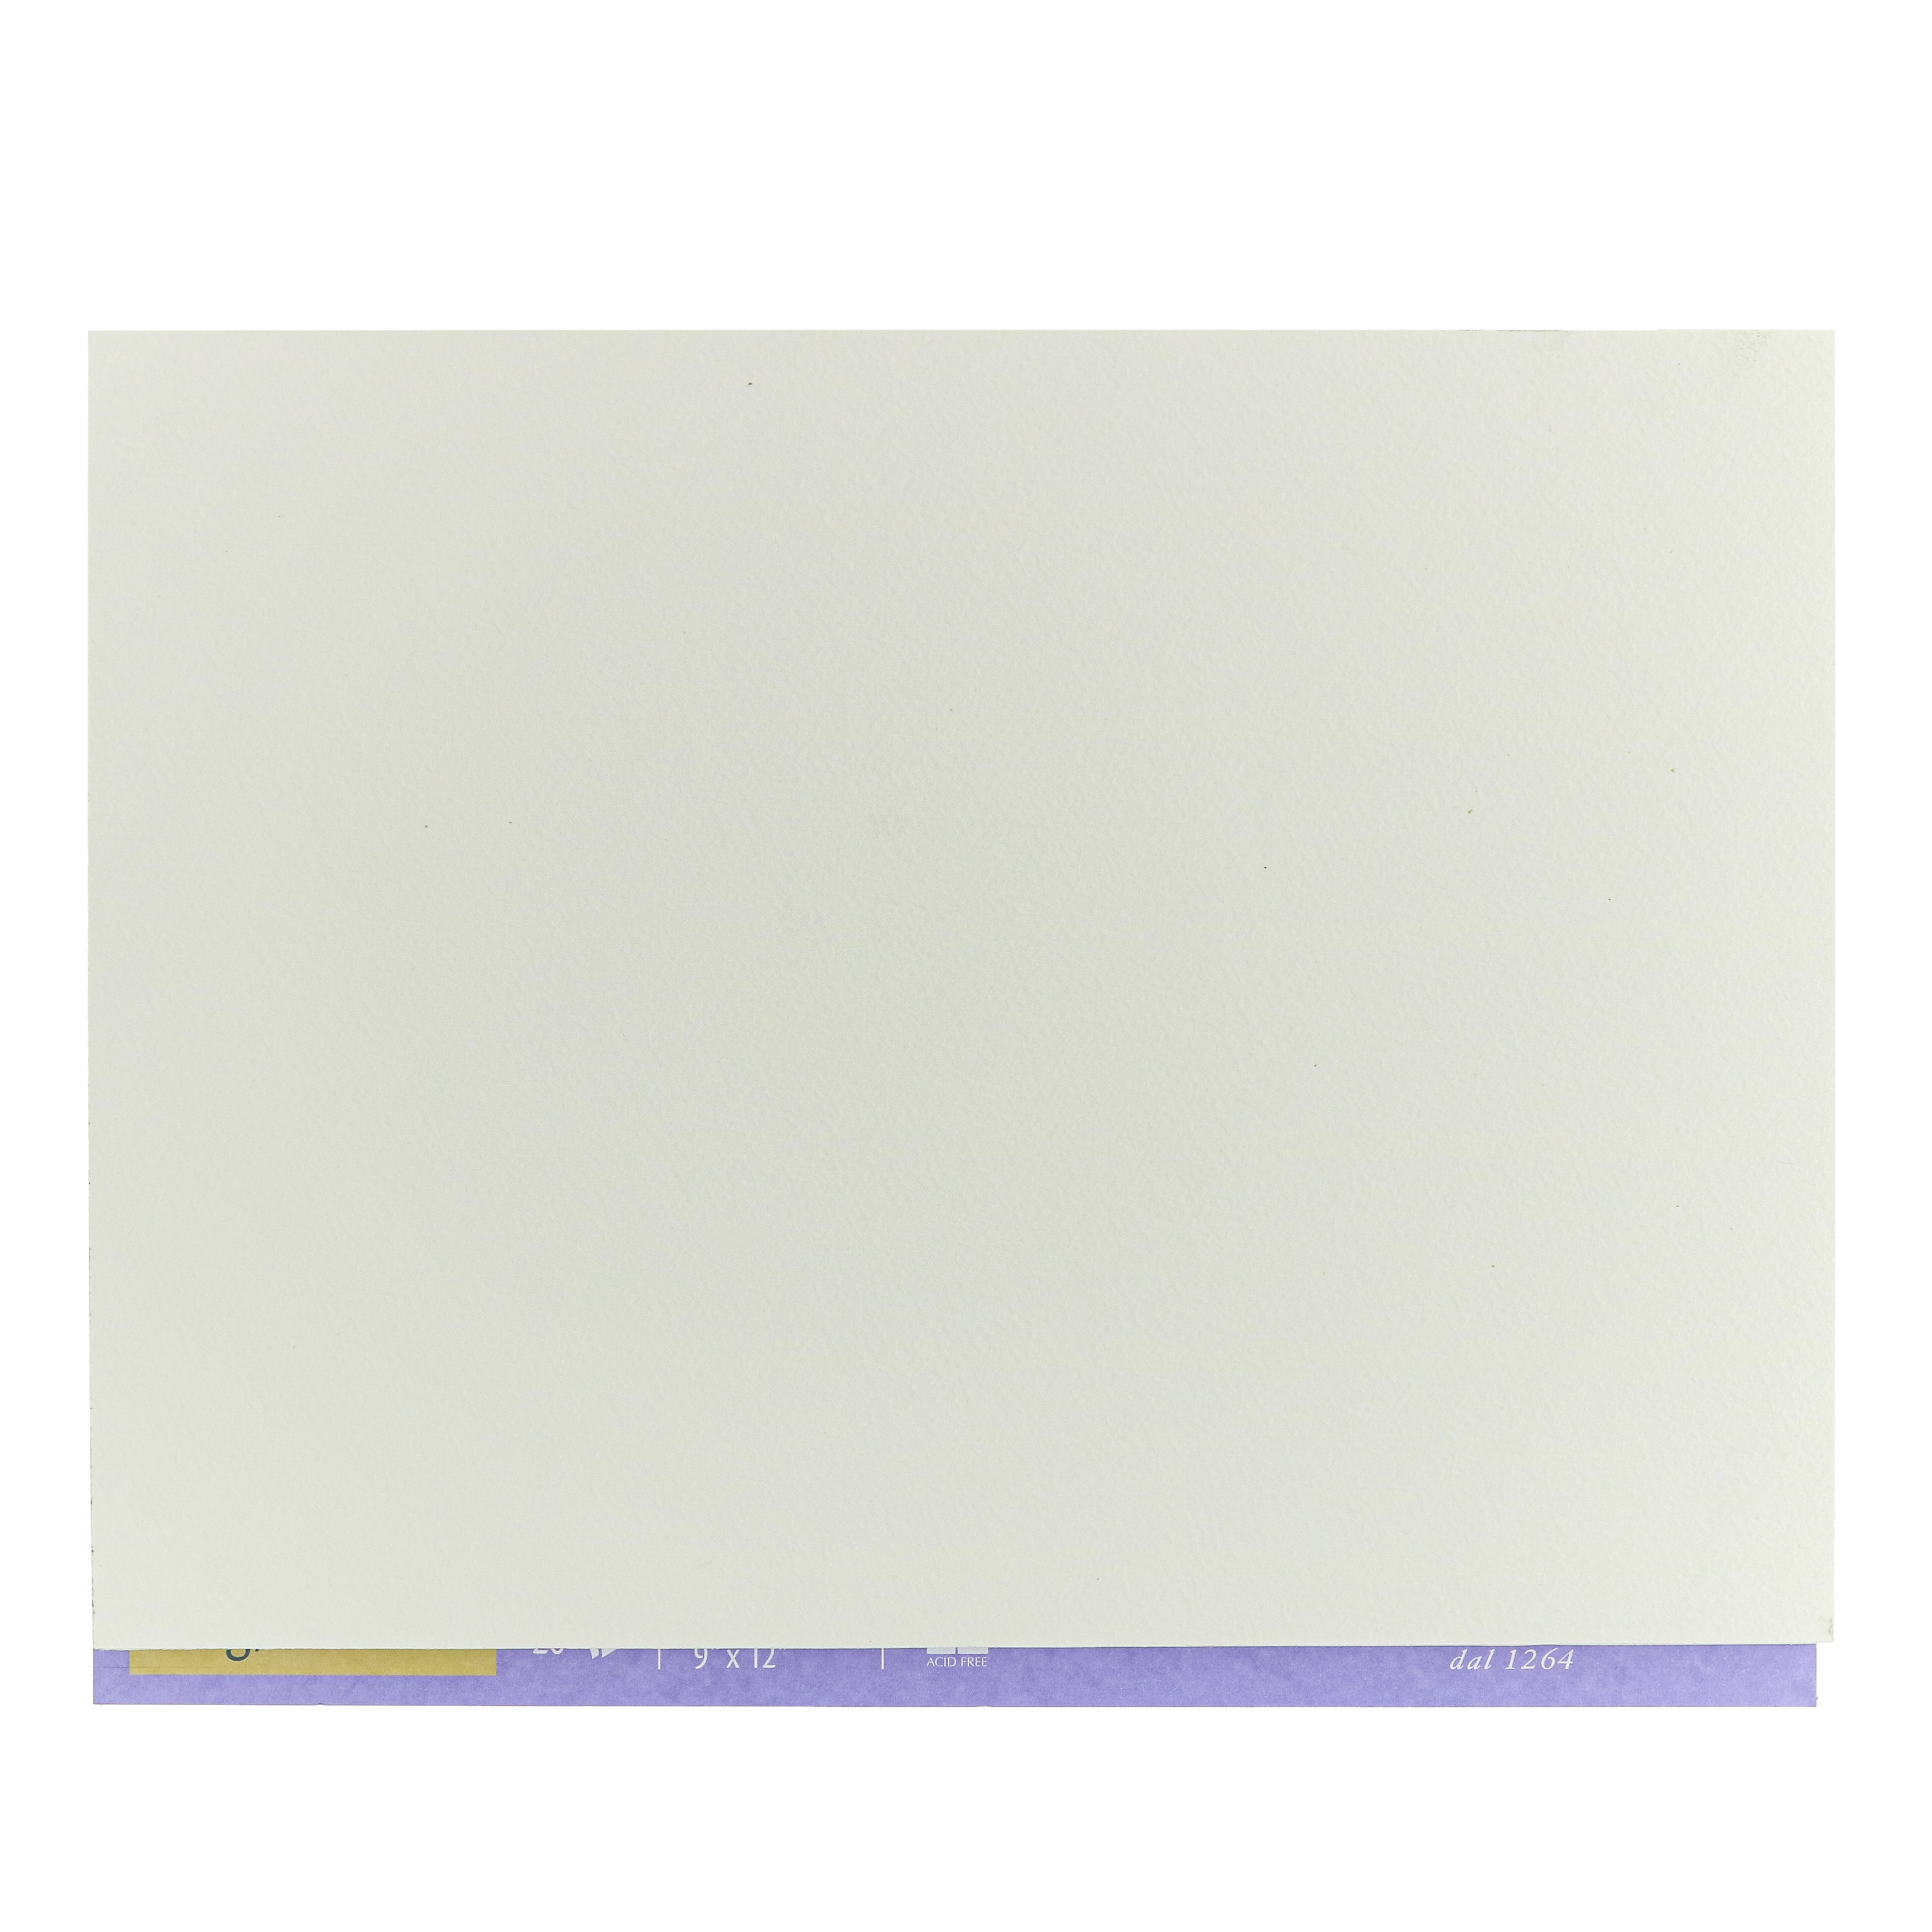 Fabriano Artistico Extra White Watercolor Block, 140 lb./300 gsm, Cold Press, 20 Sheets, 9" x 12" - image 2 of 3